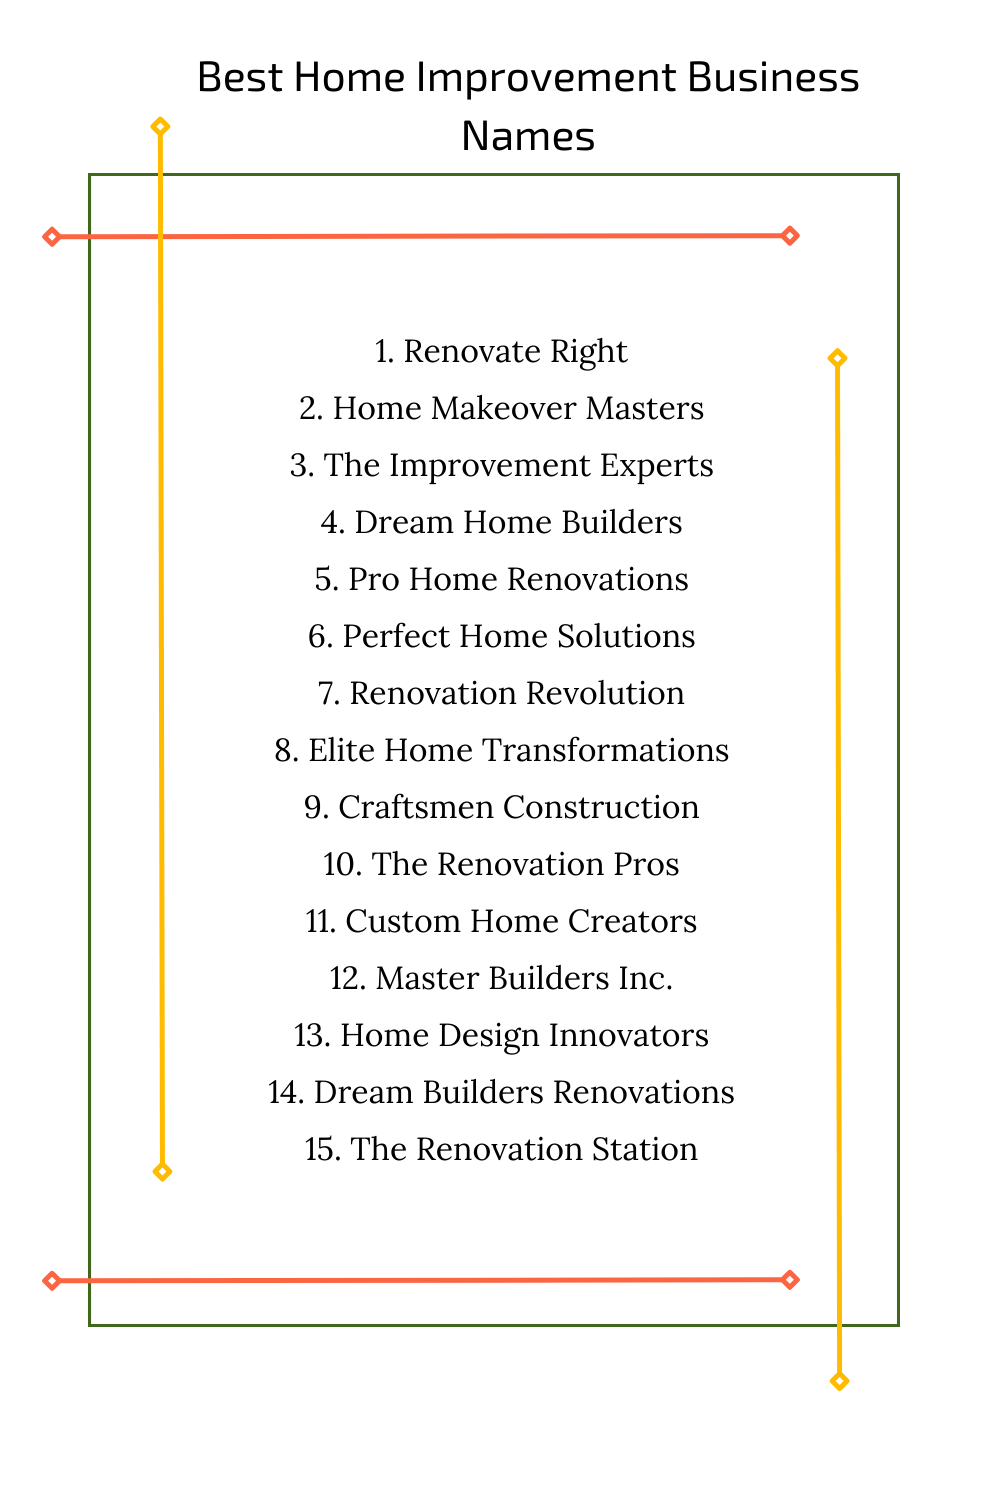 Best Home Improvement Business Names